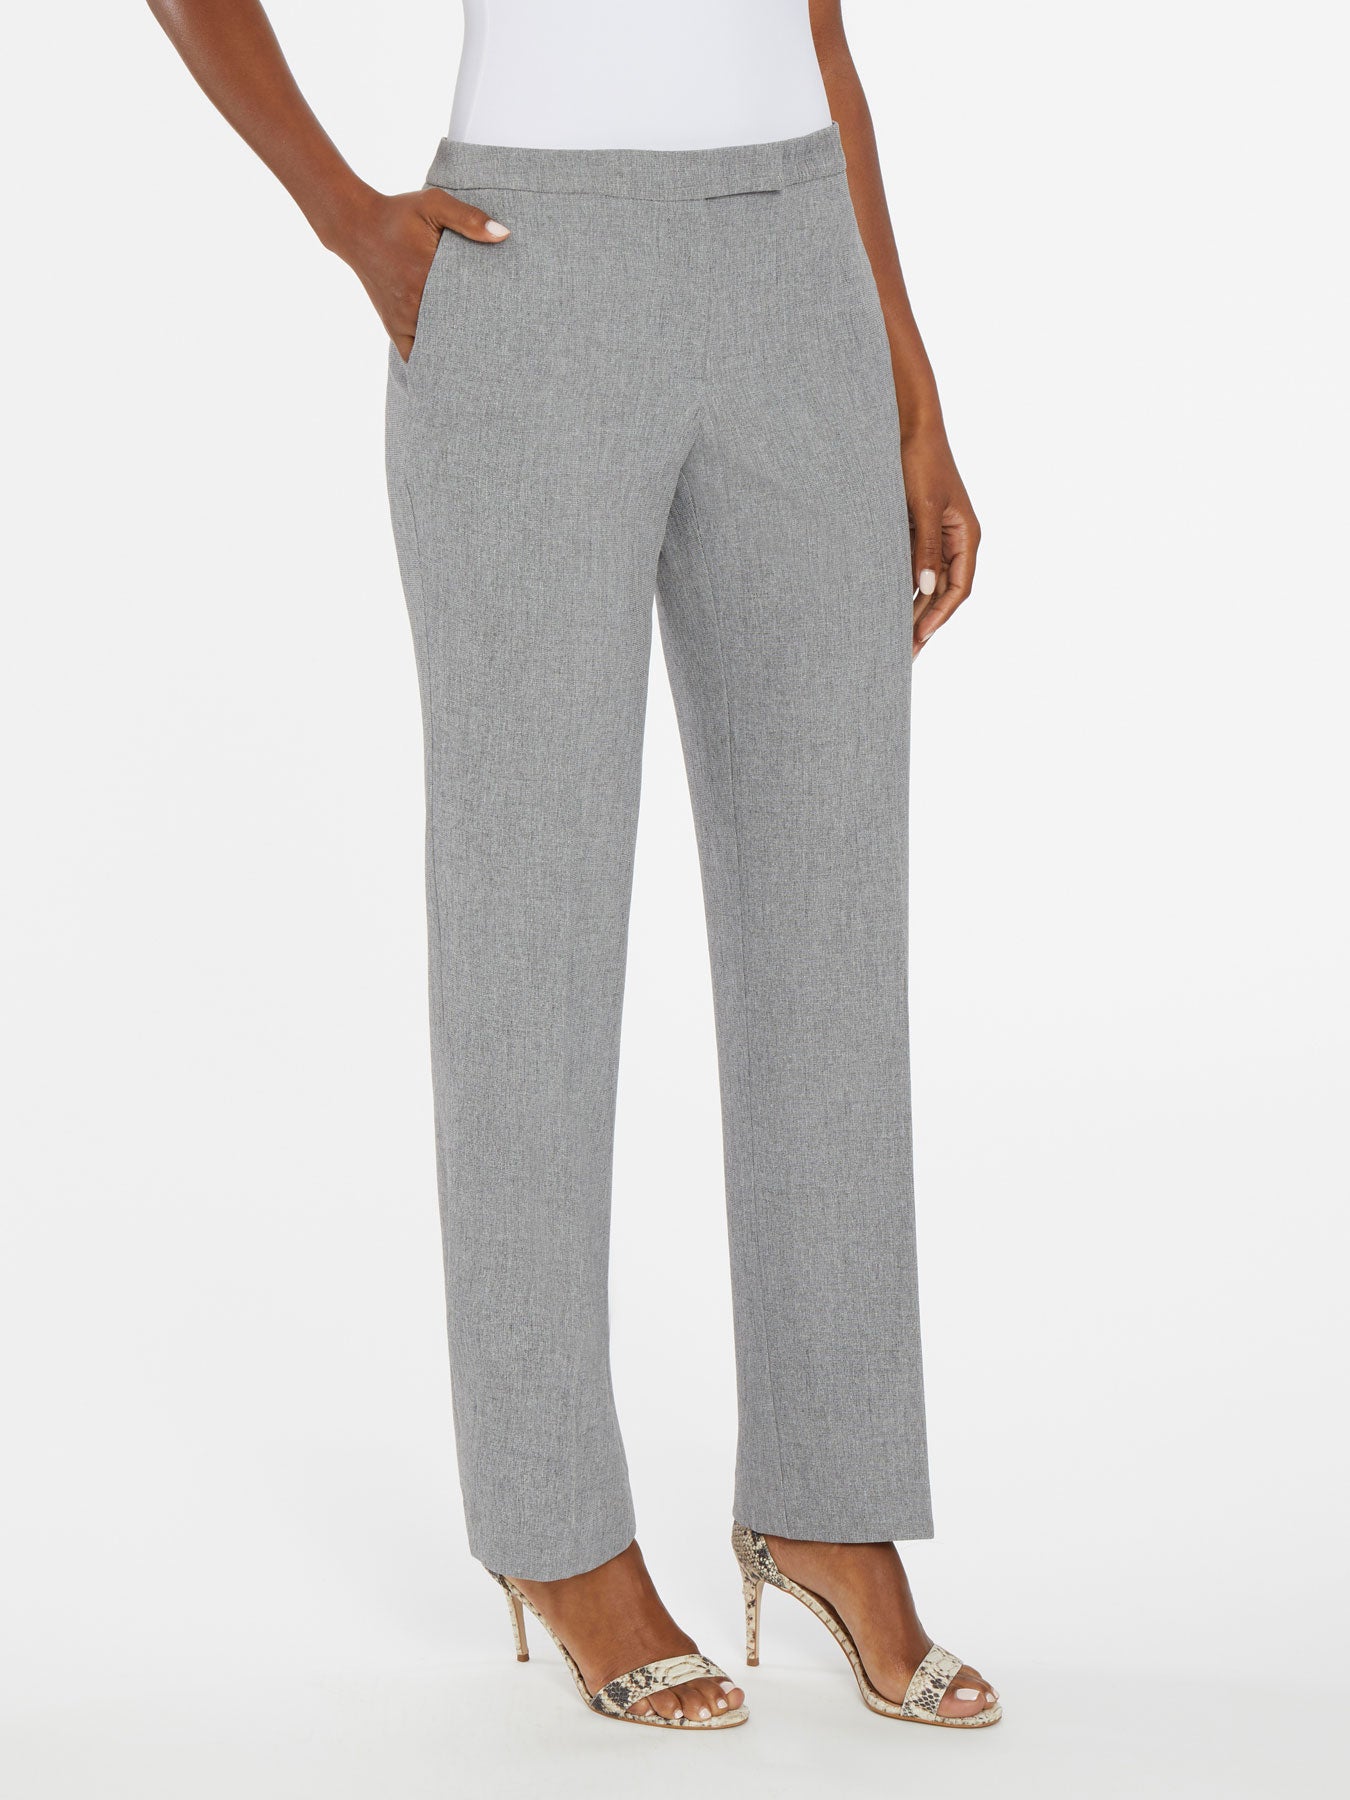 Kasper Women's Petite TAB Front Pant, Grey/Black, 8P at